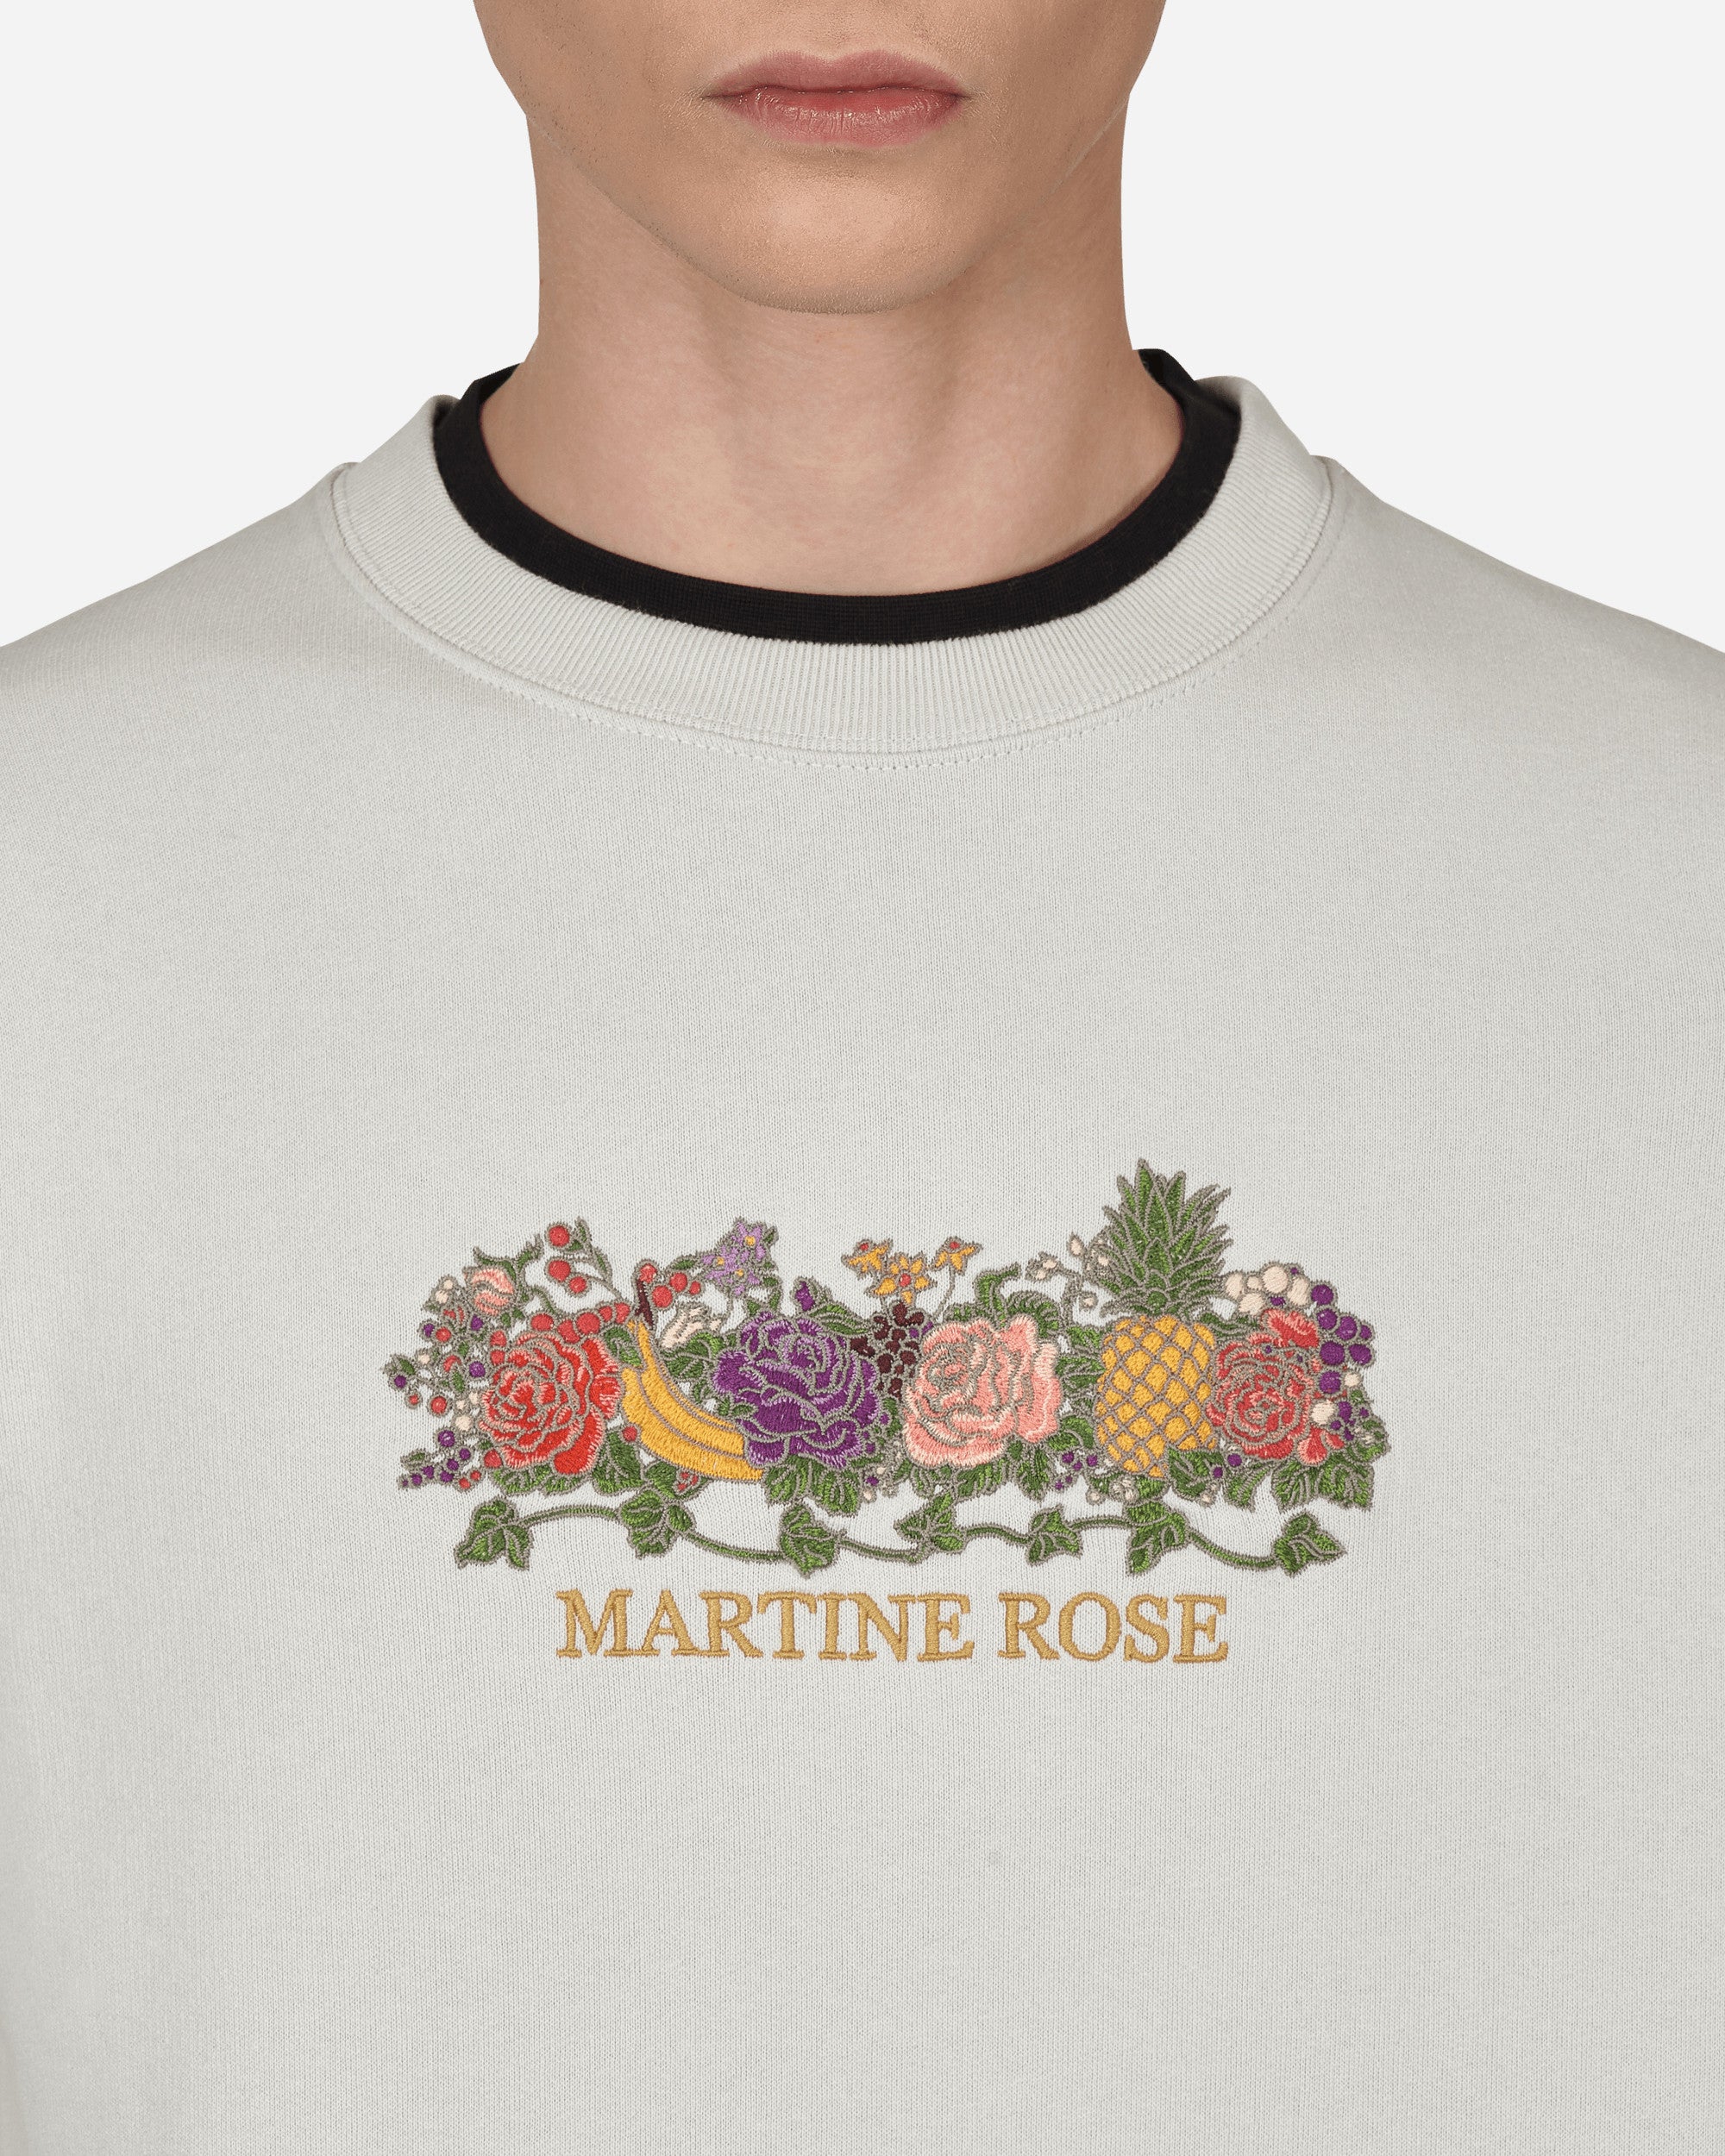 Martine Rose Classic Crew Sweatshirt Embroidery Light Grey Sweatshirts Crewneck MRAW22-601  001